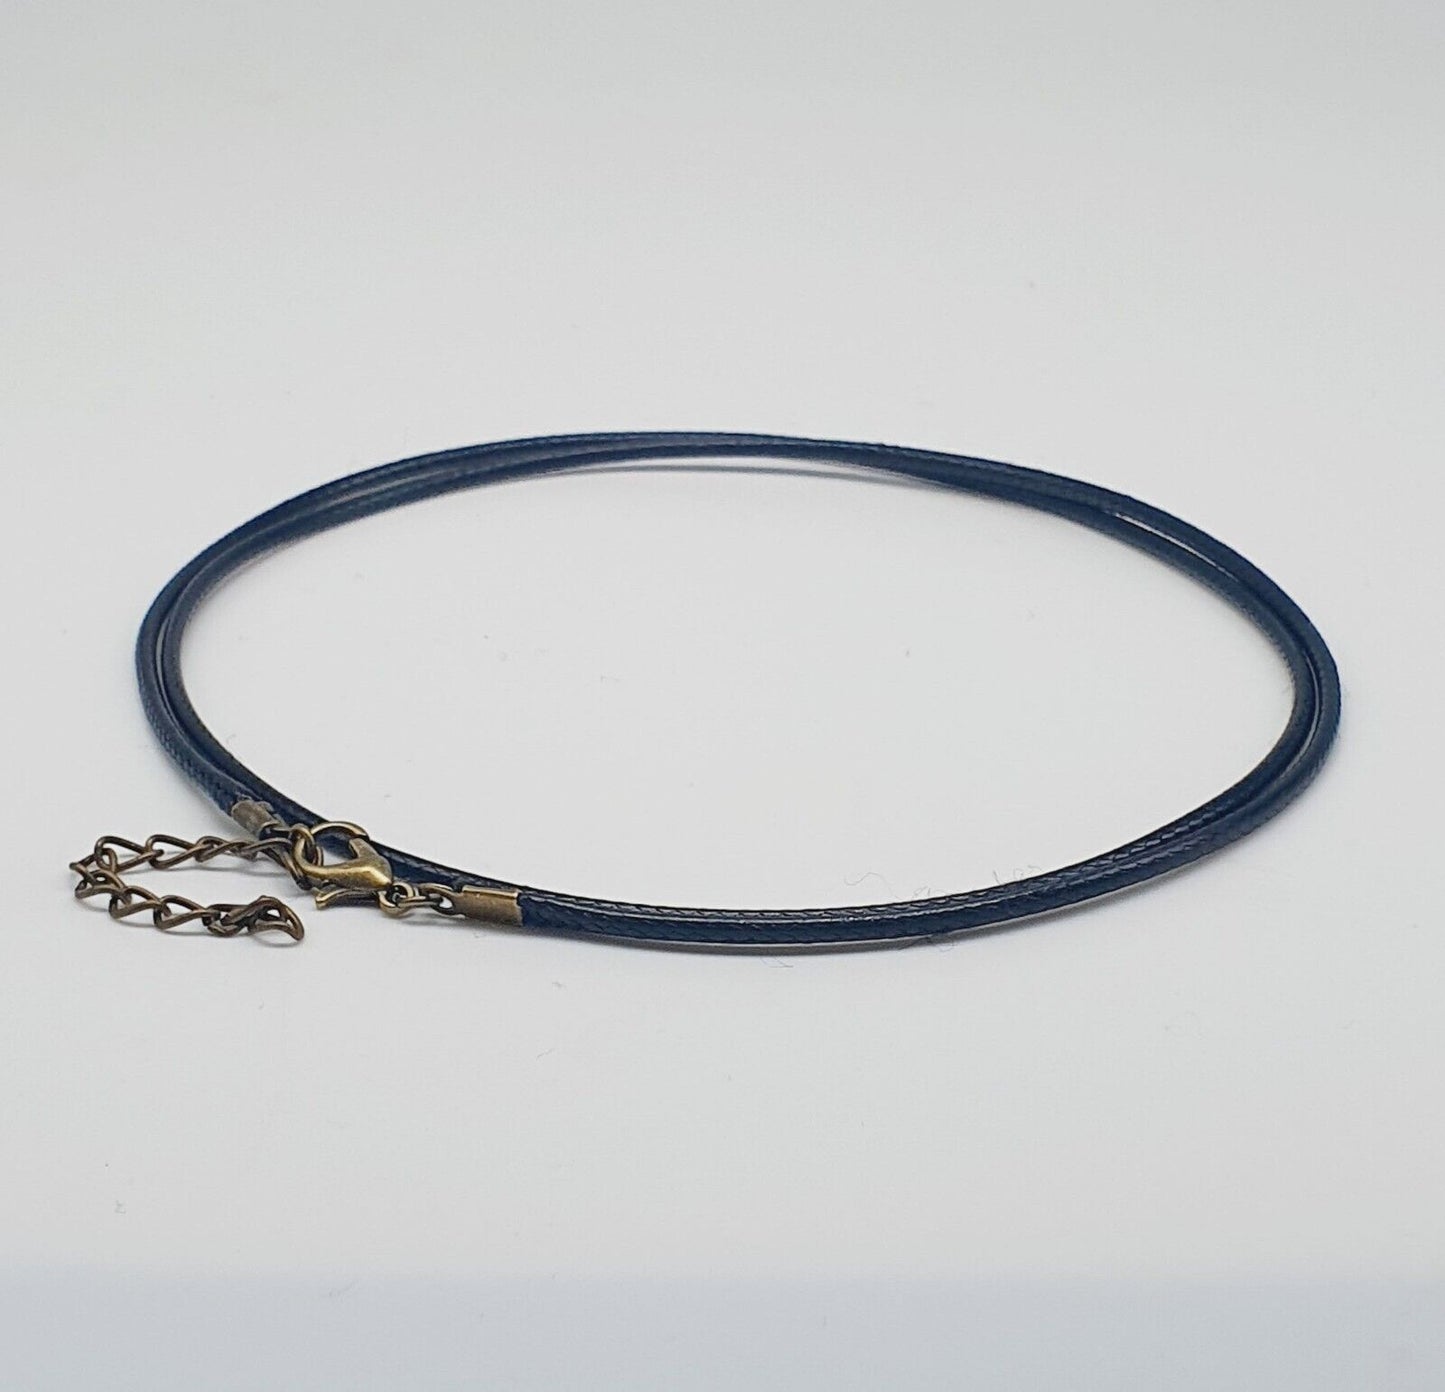 63cm(25") Long Black Faux Leather 2mm Cord with Antique Bronze Clasp Necklace